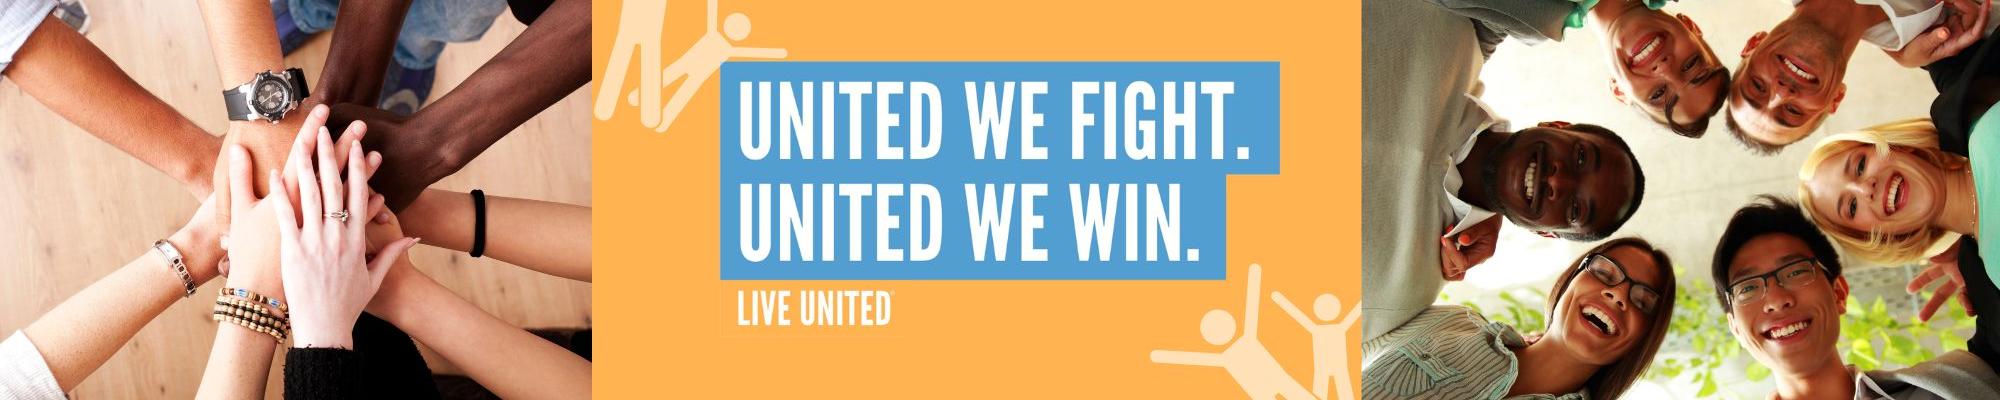 United we fight. United we win. Live United.